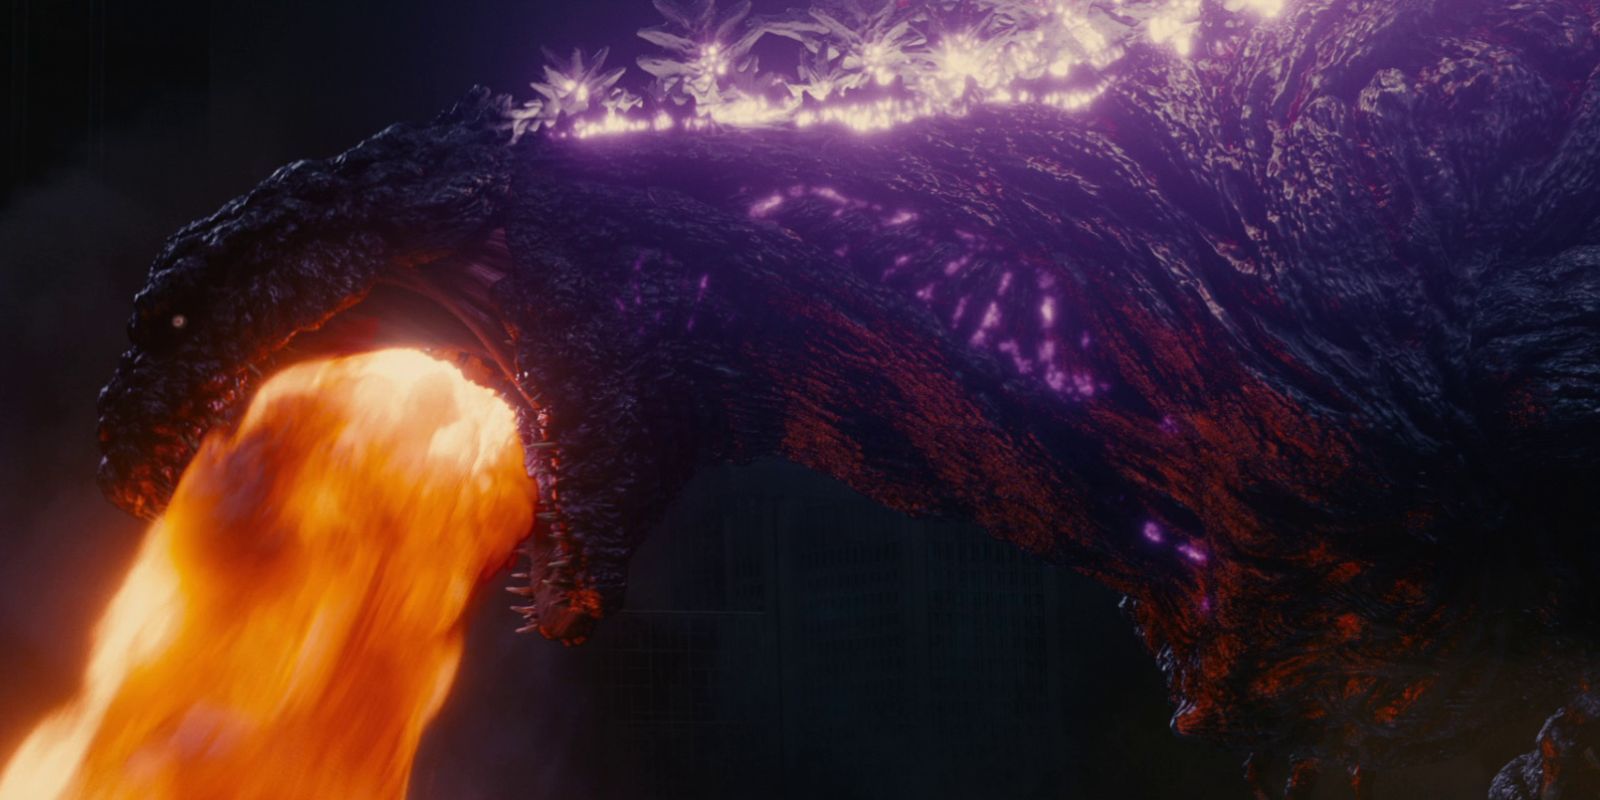 Shin Godzilla breathing fire.